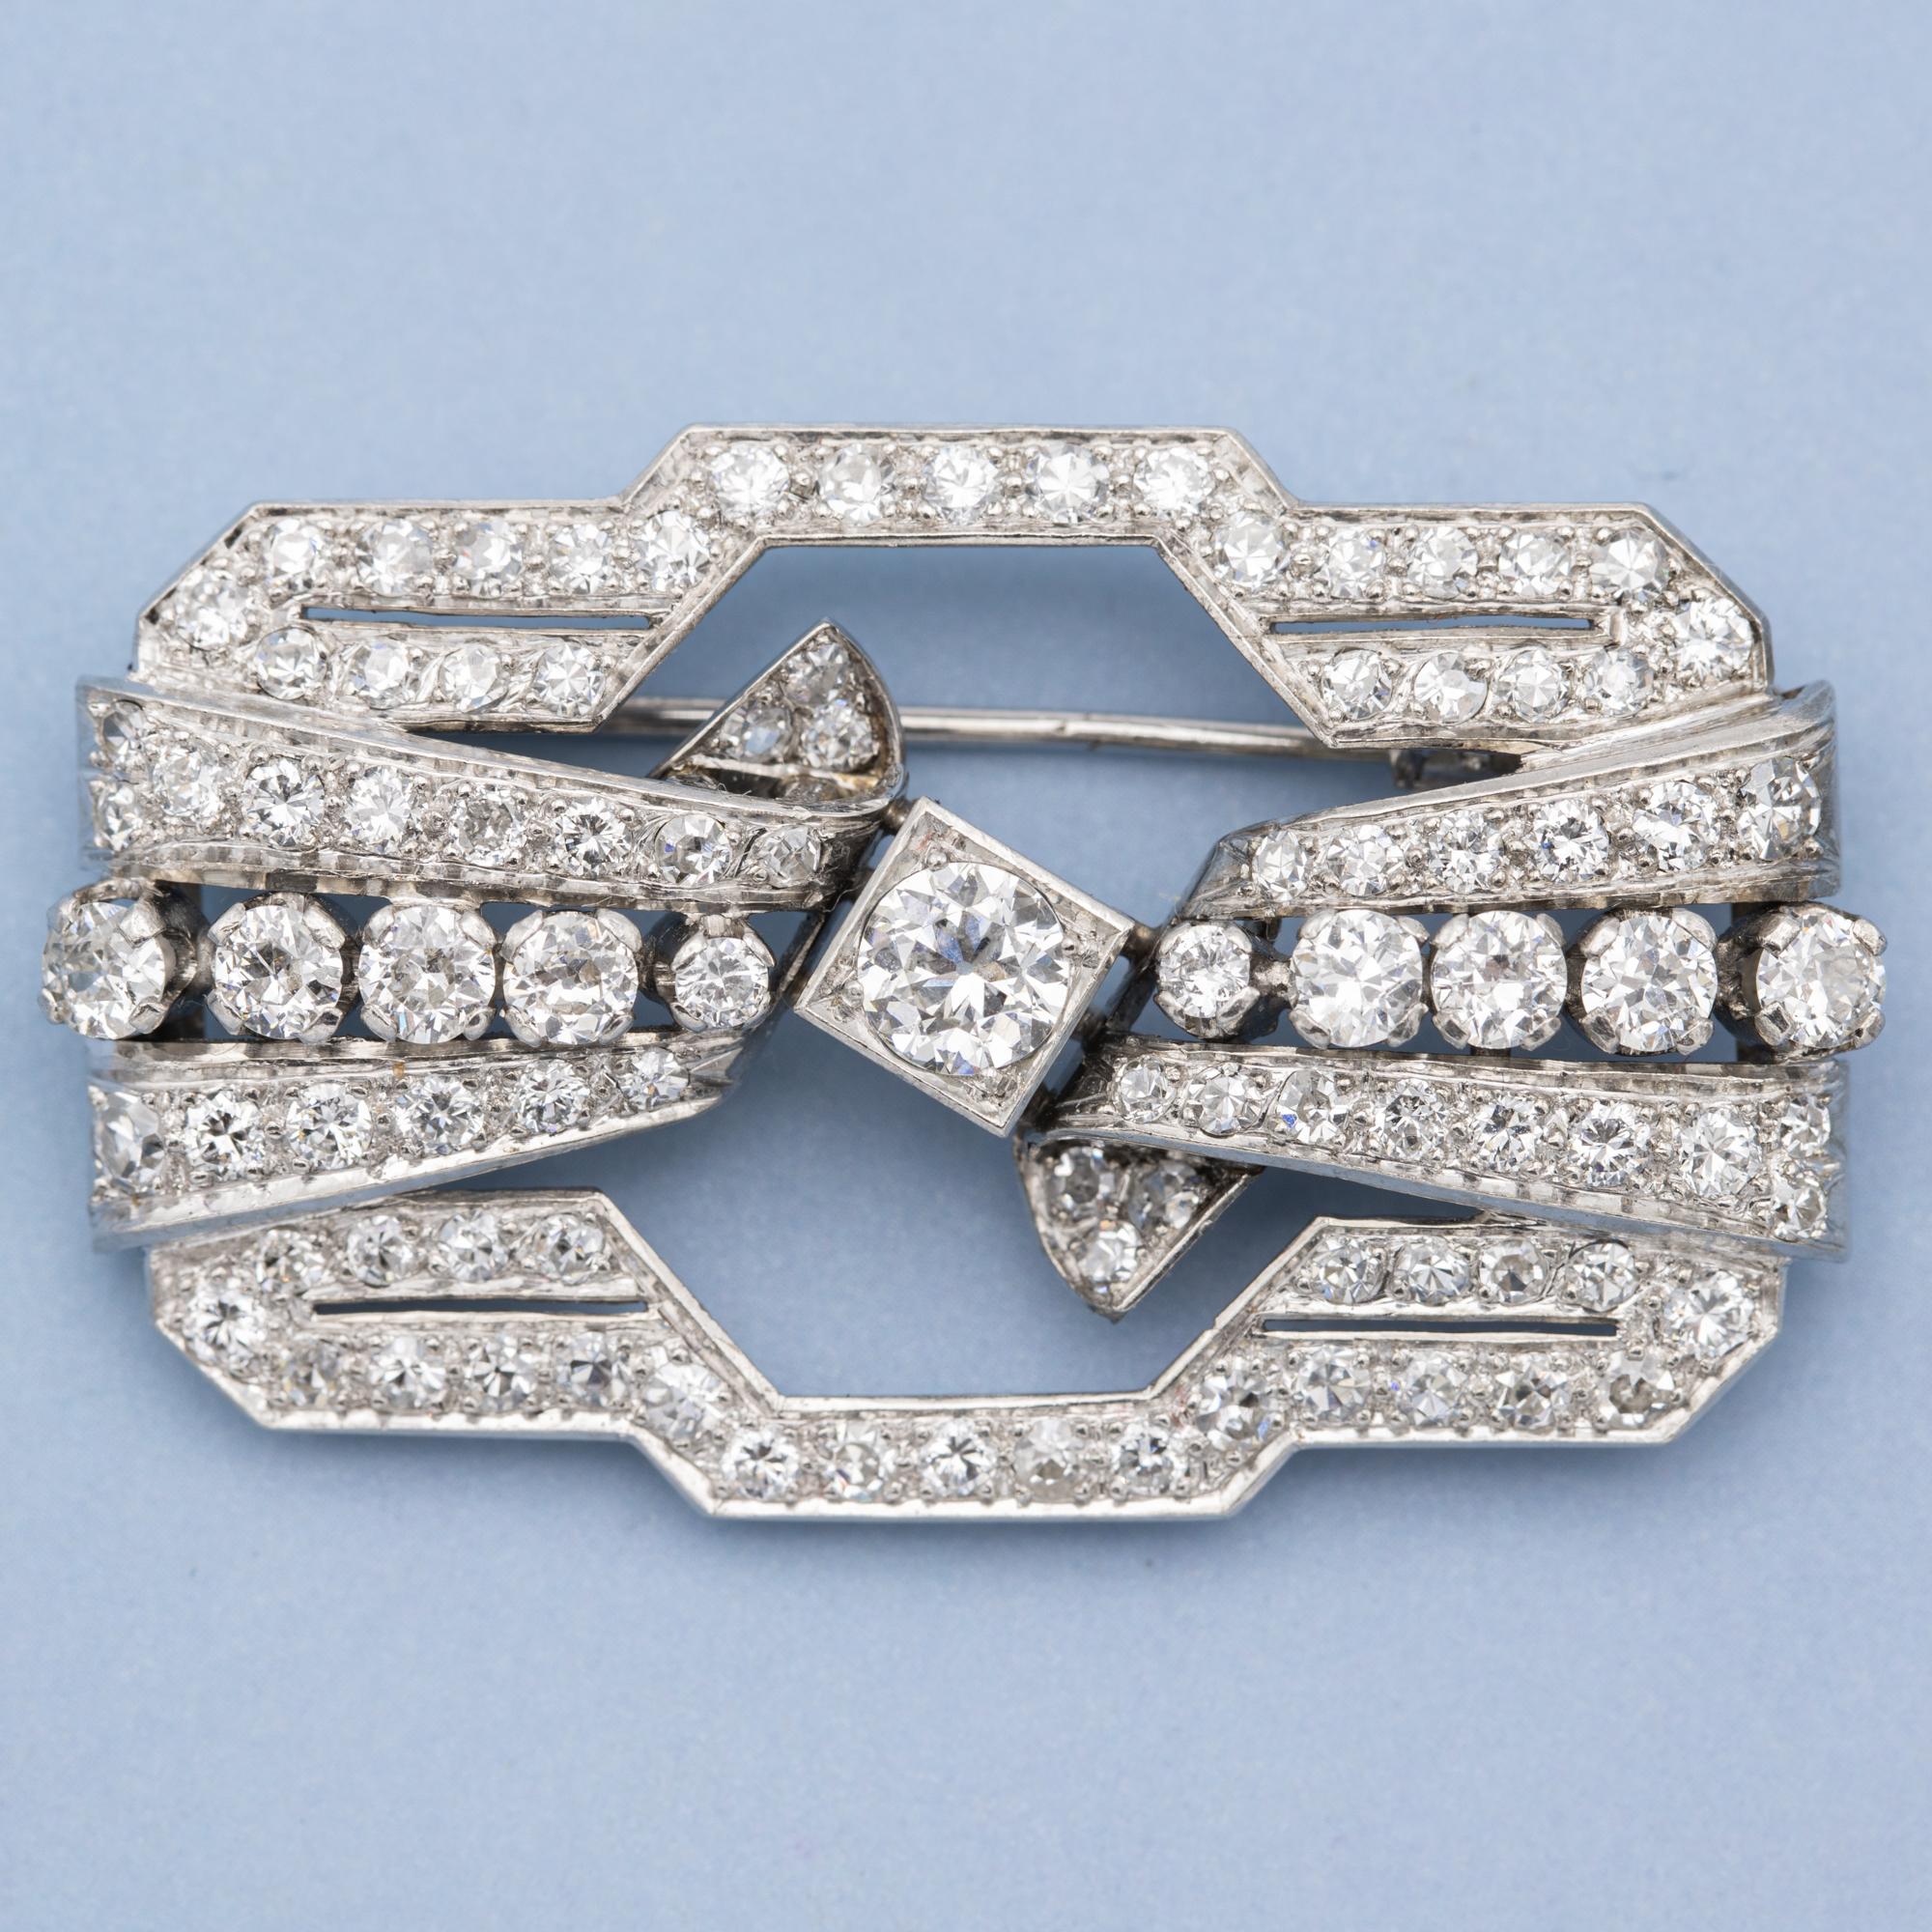 Art Deco brooch - 3.1 ct diamond - Old cut - Antique jewelry - Platinum 1930  For Sale 3